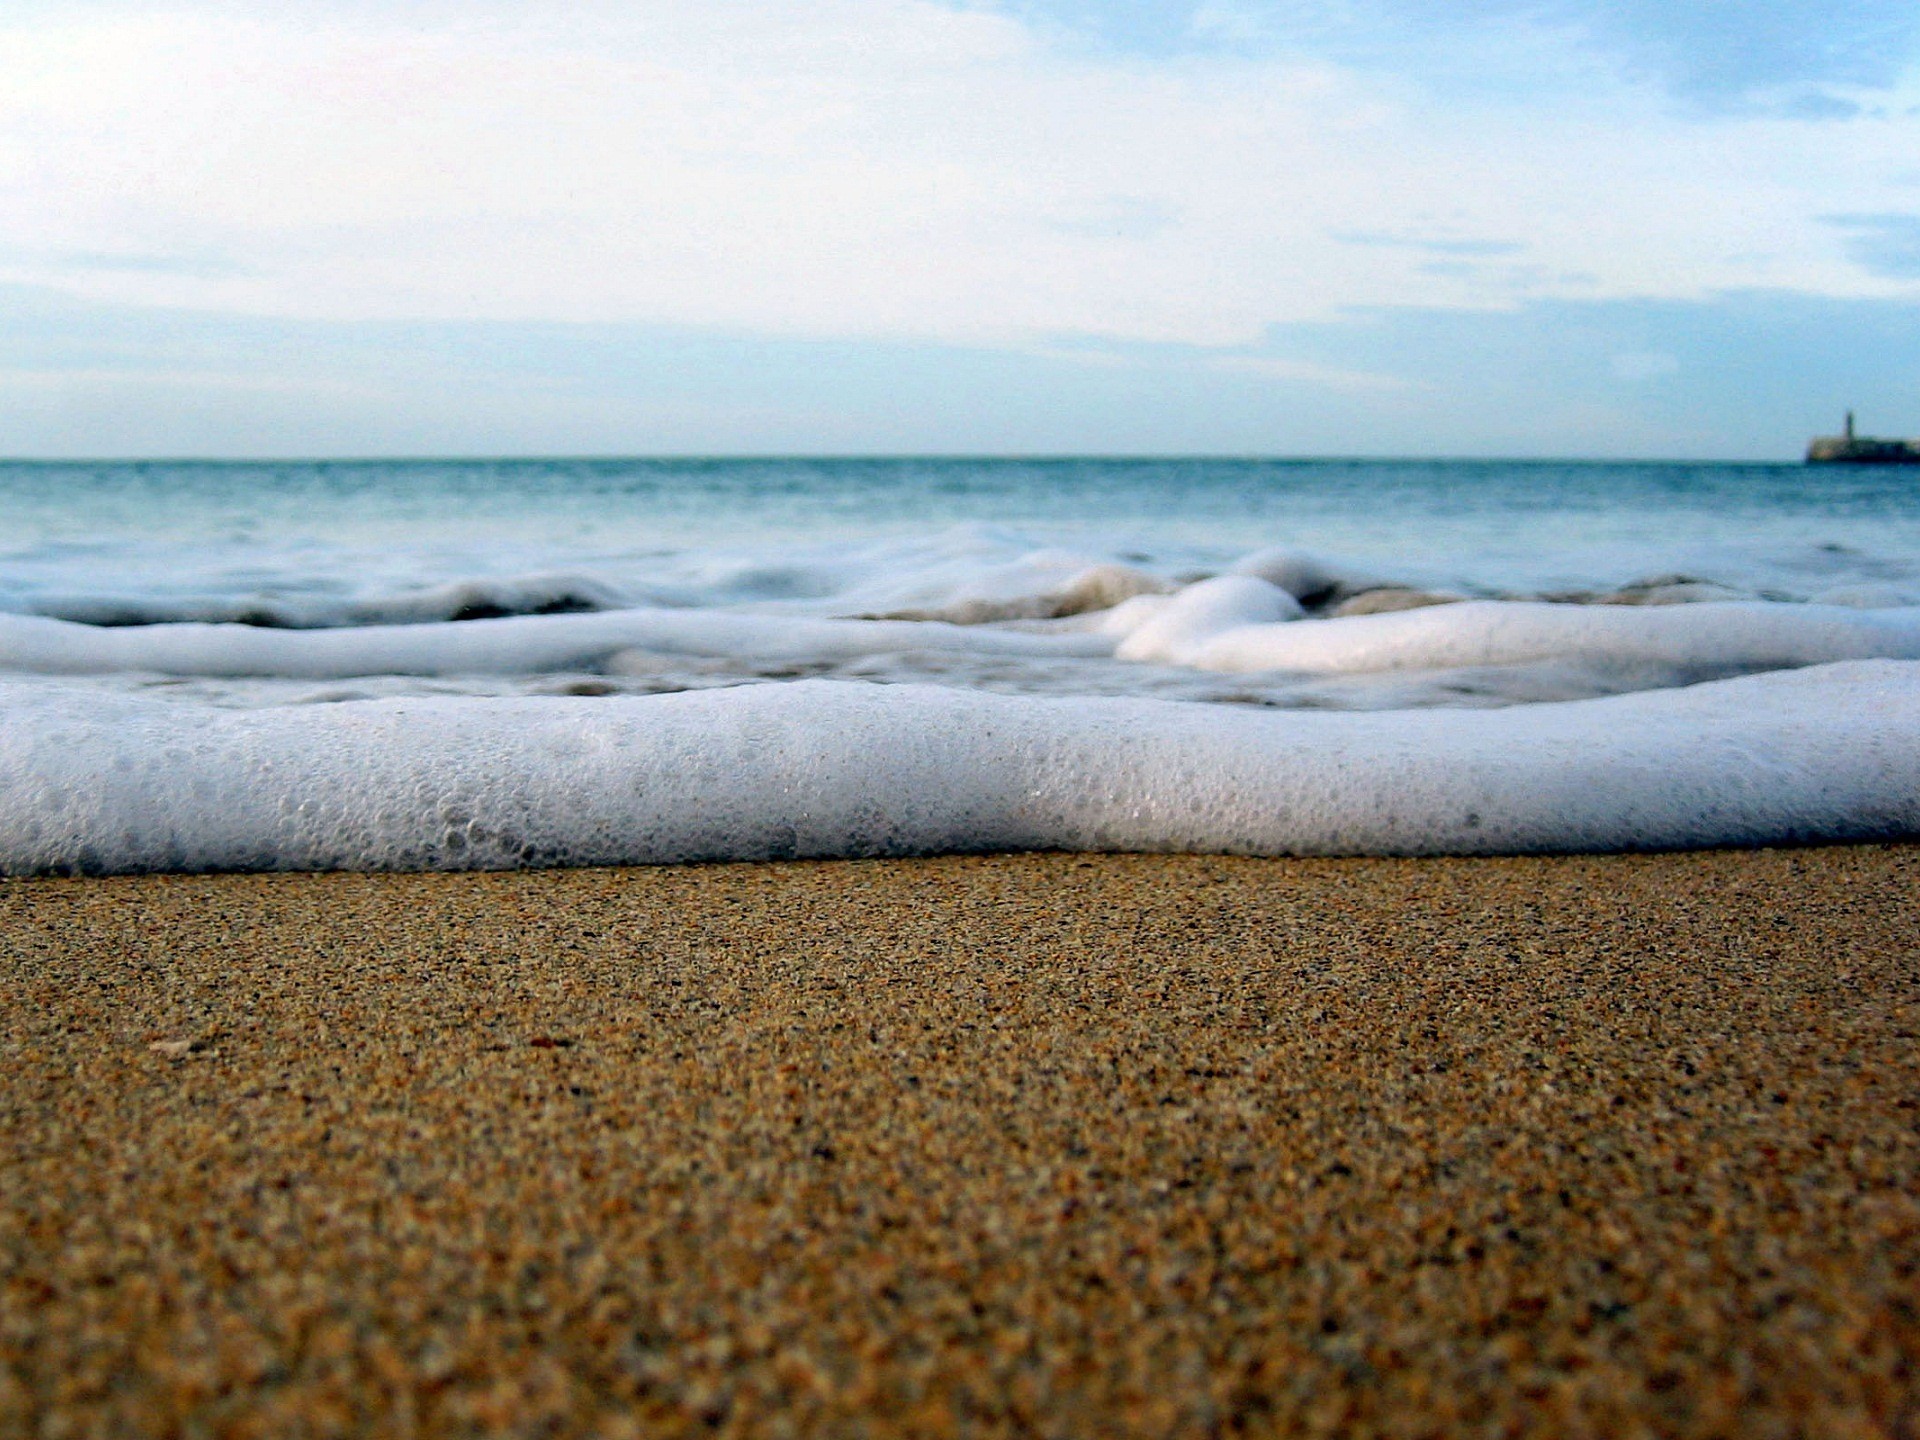 Sea foam on the shore